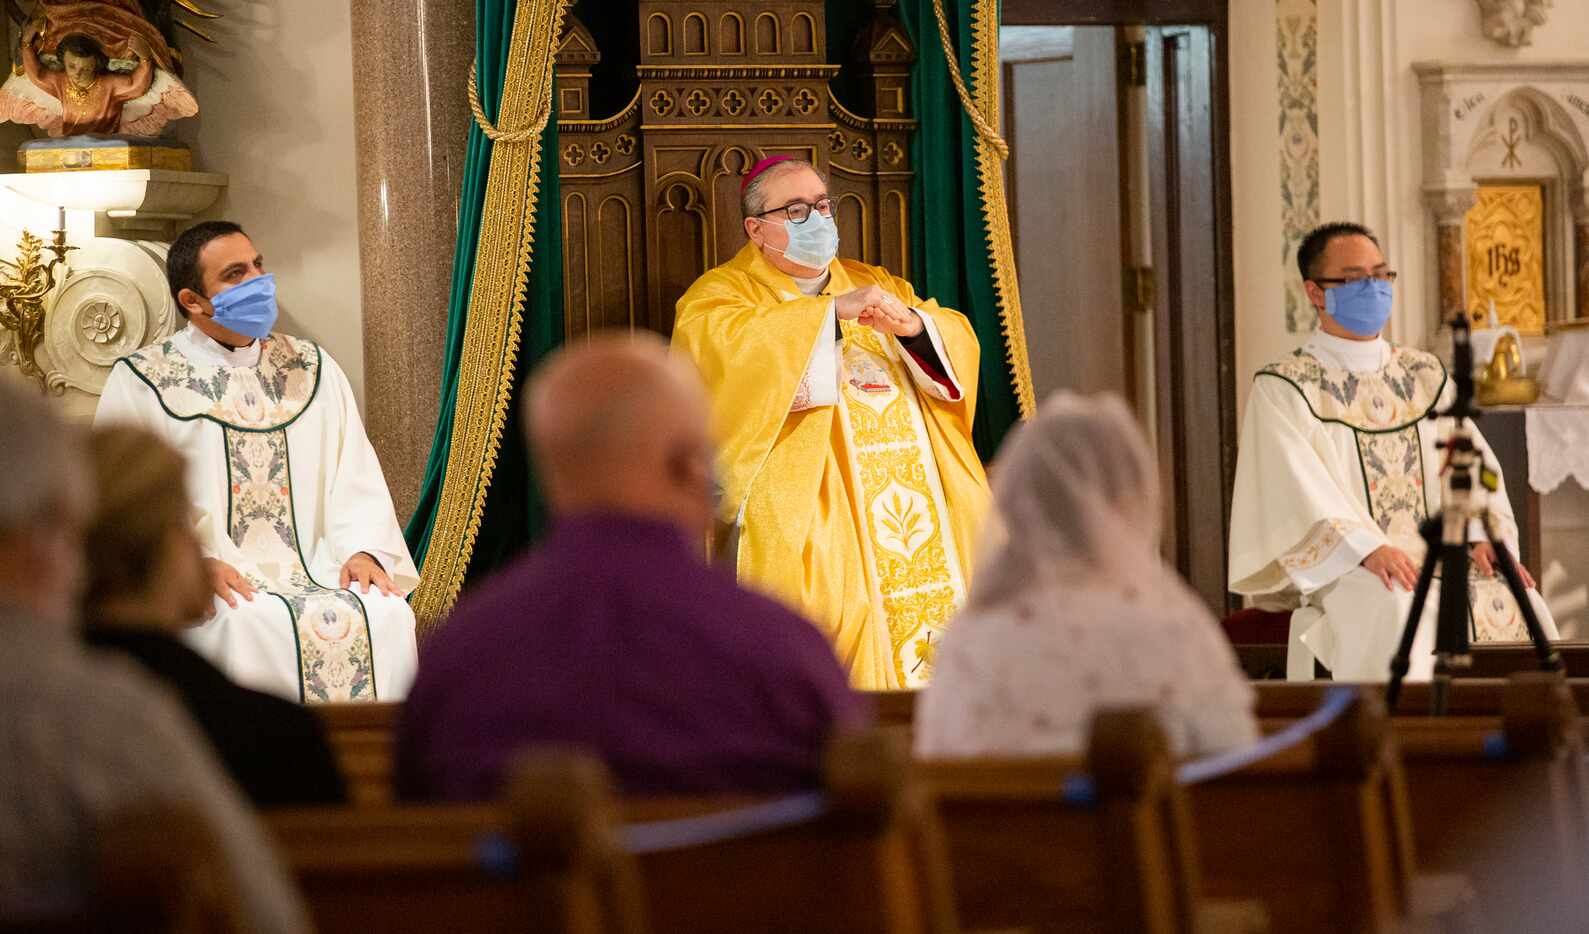 Bishop Michael Olson (center) rubs sanitizer on his hands during mass.